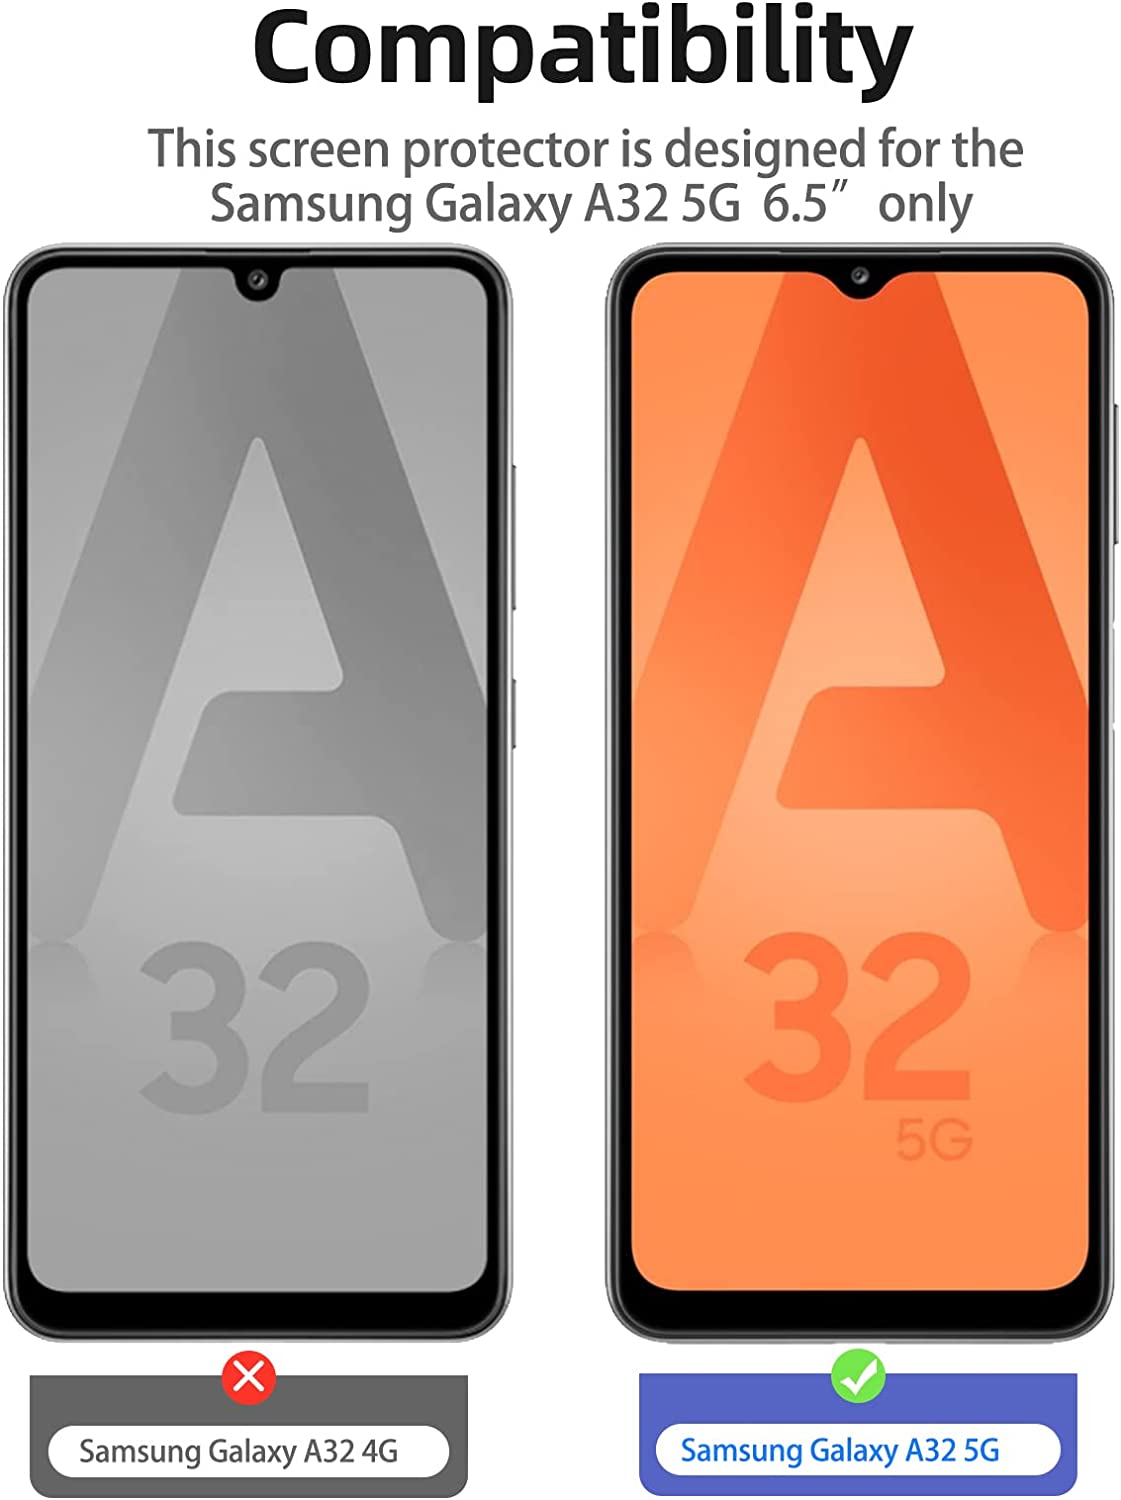 NEW’C Lot de 2, Verre Trempé pour Samsung Galaxy A32 5G (6,5), Film Protection écran – Anti Rayures – sans Bulles d’air -Ultra Résistant (0,33mm HD Ultra Transparent) Dureté 9H Glass – 1